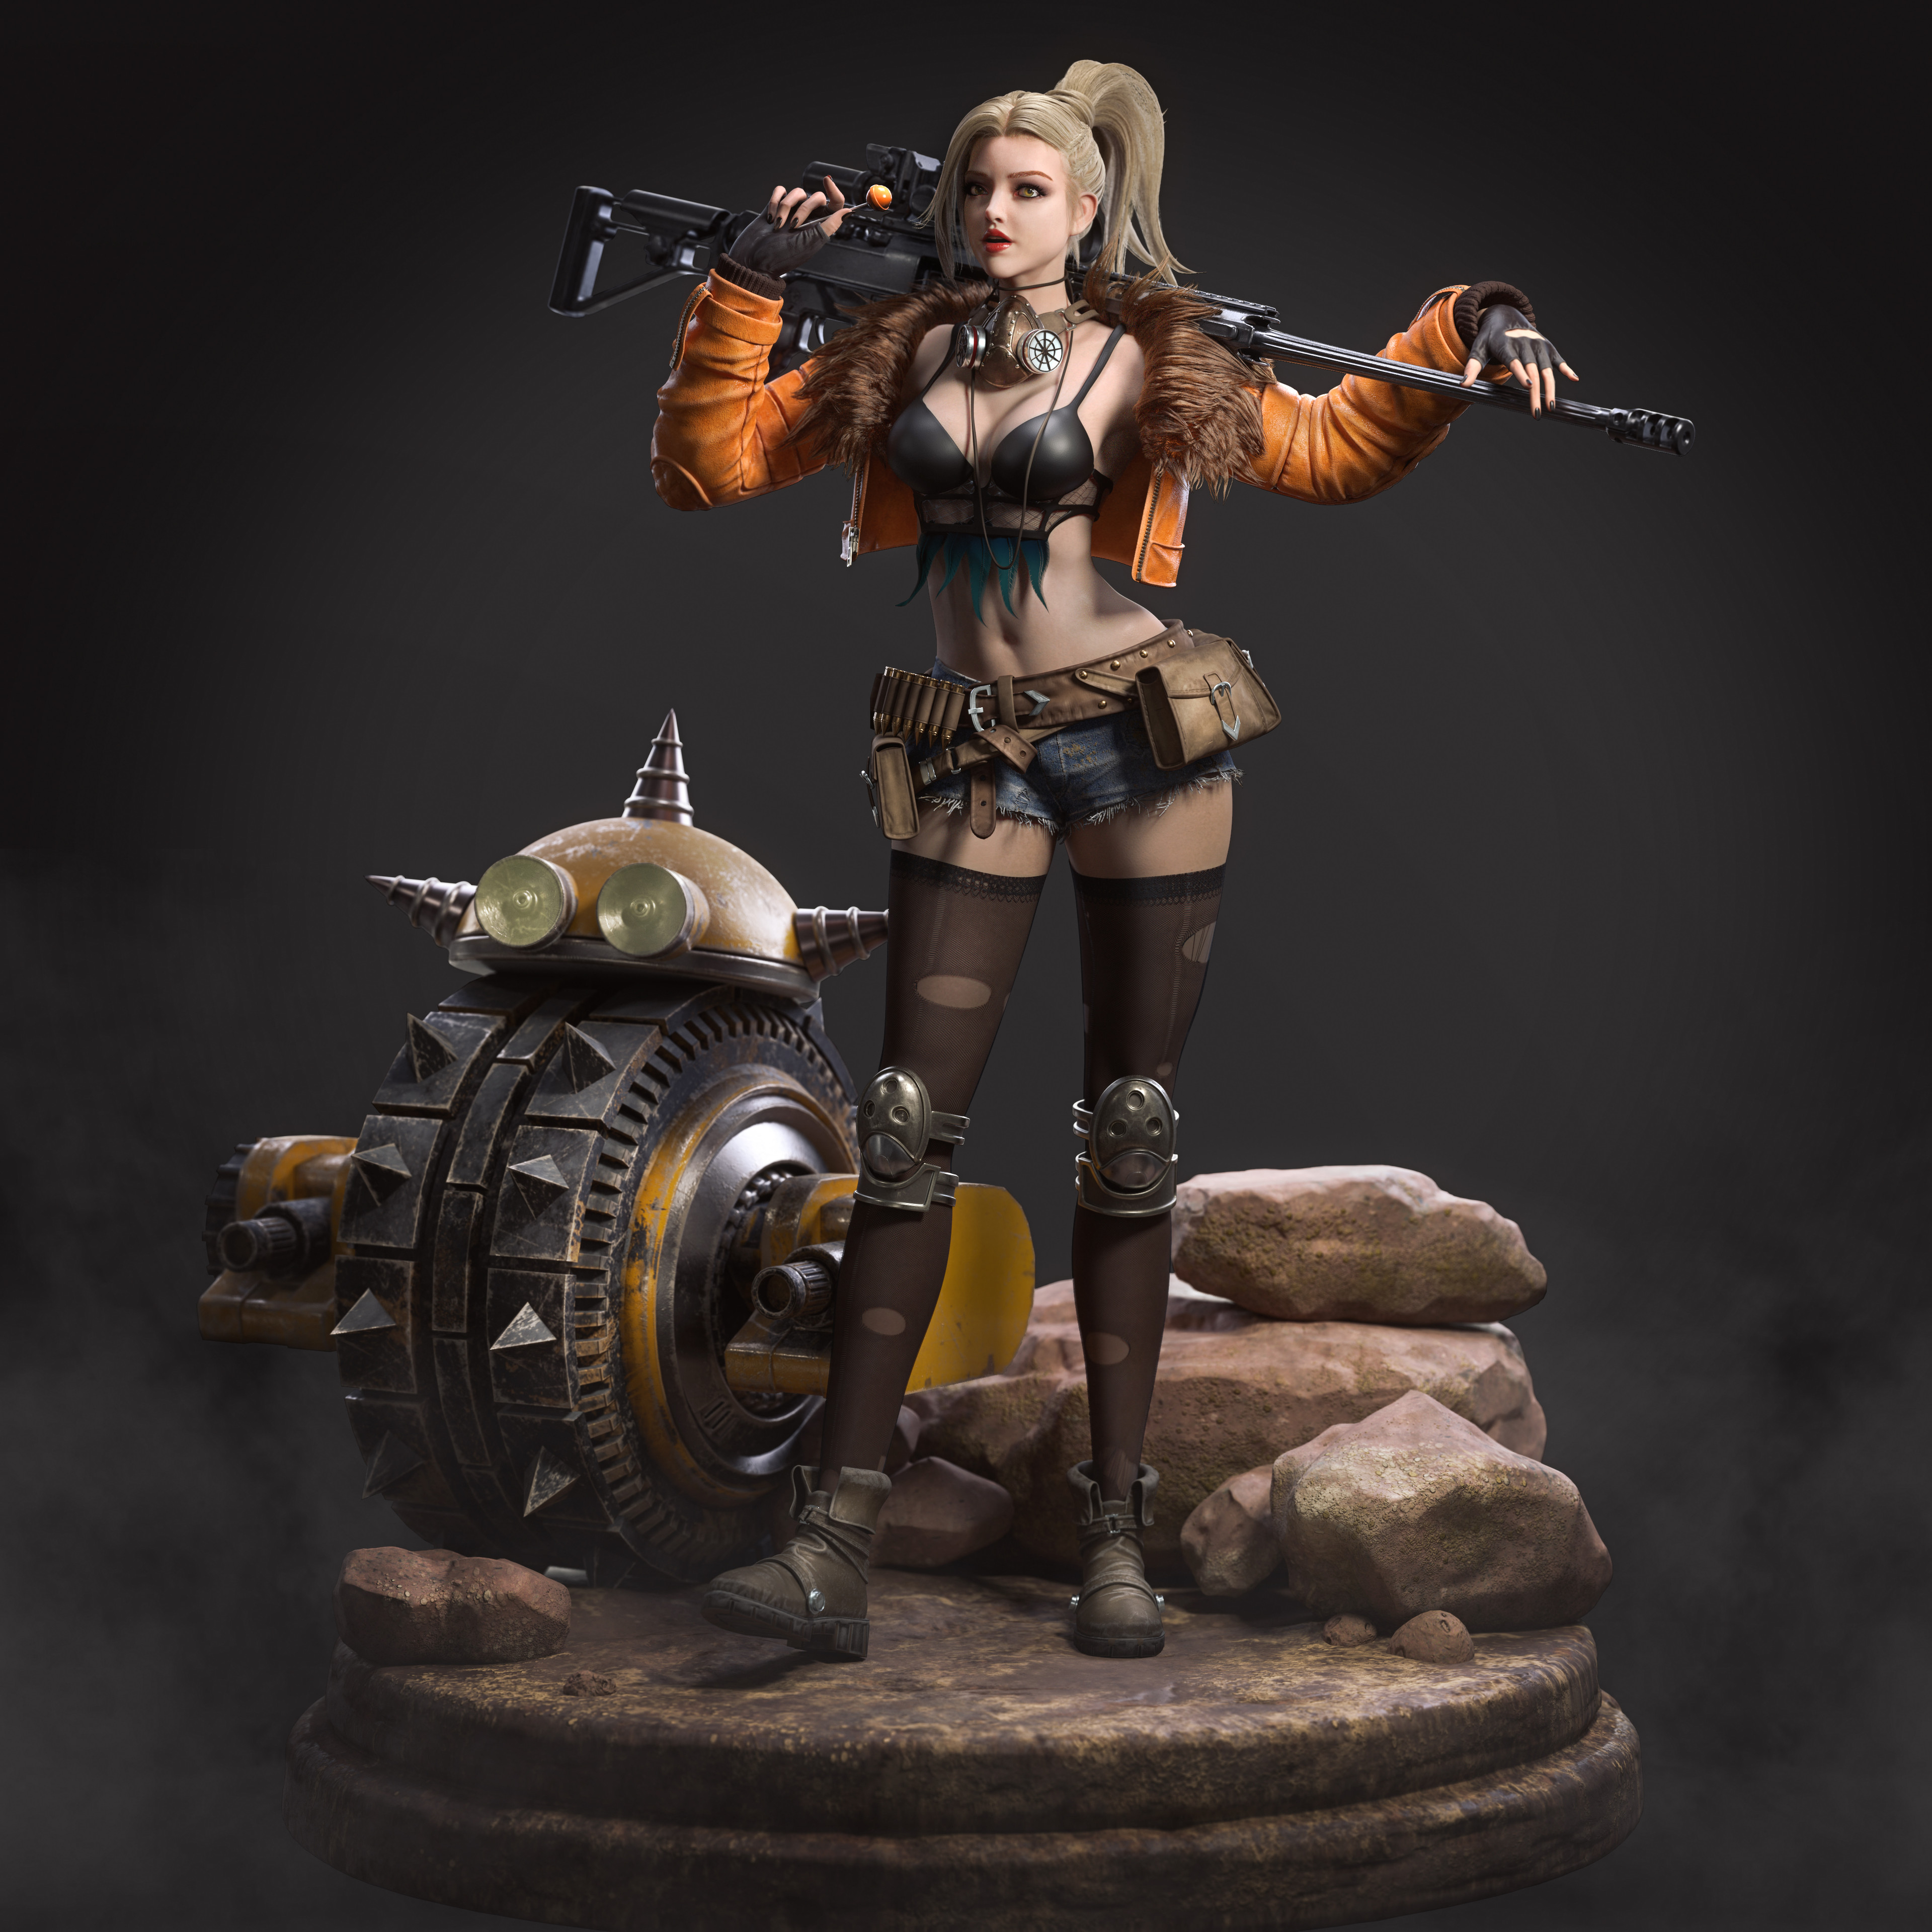 General 3840x3840 digital art fantasy girl women CGI gun science fiction sniper rifle robot artwork girls with guns